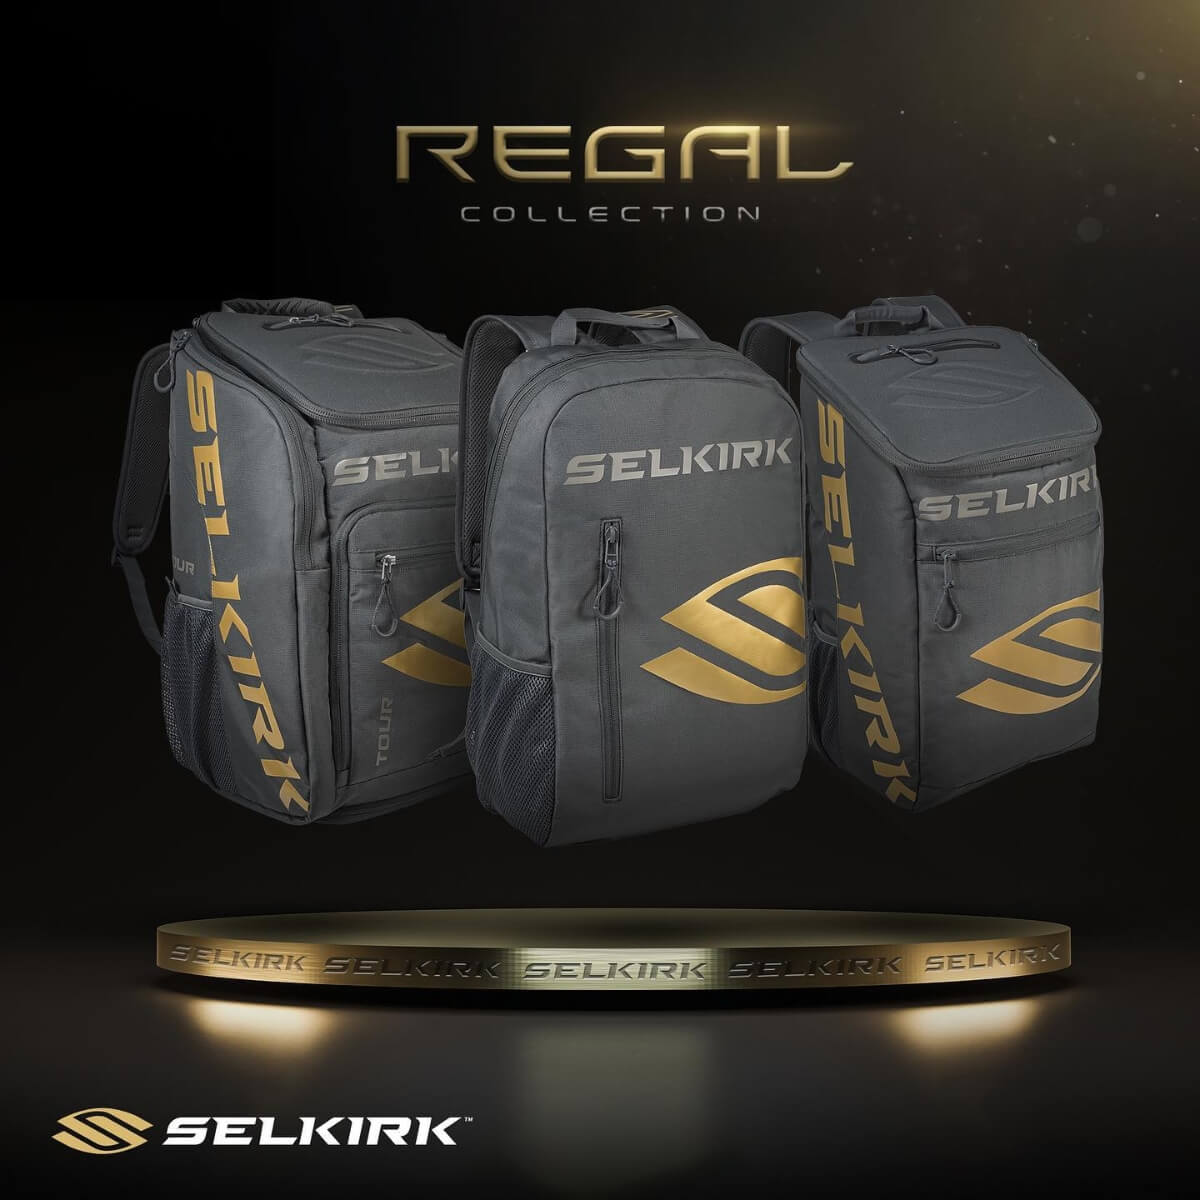 Selkirk day back pack / rugzak regal instagram